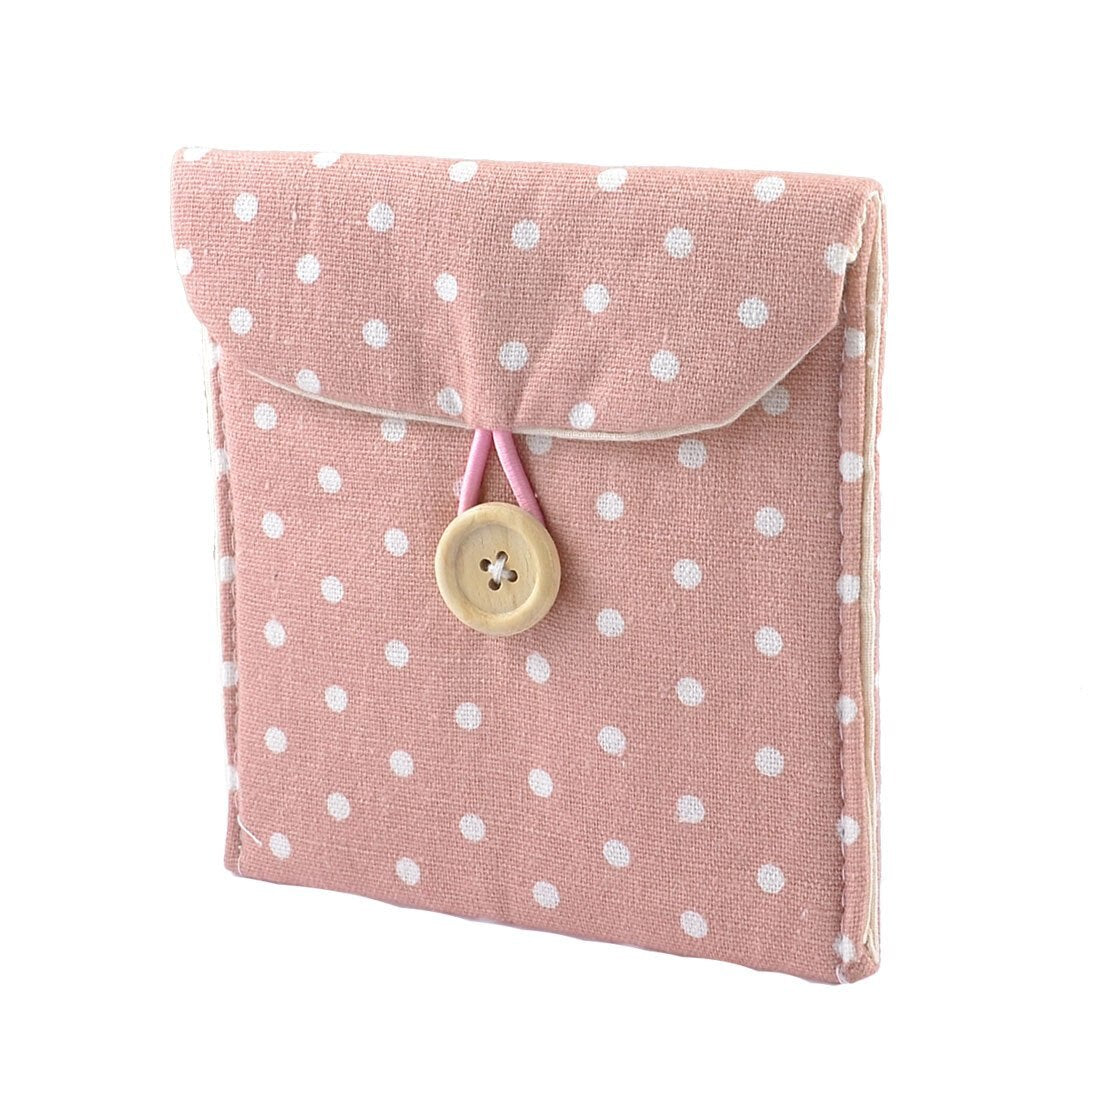 Fashion! Lady Soft Cotton Blends Polka Dots Sanitary Napkins Holder Bag Pink - ebowsos